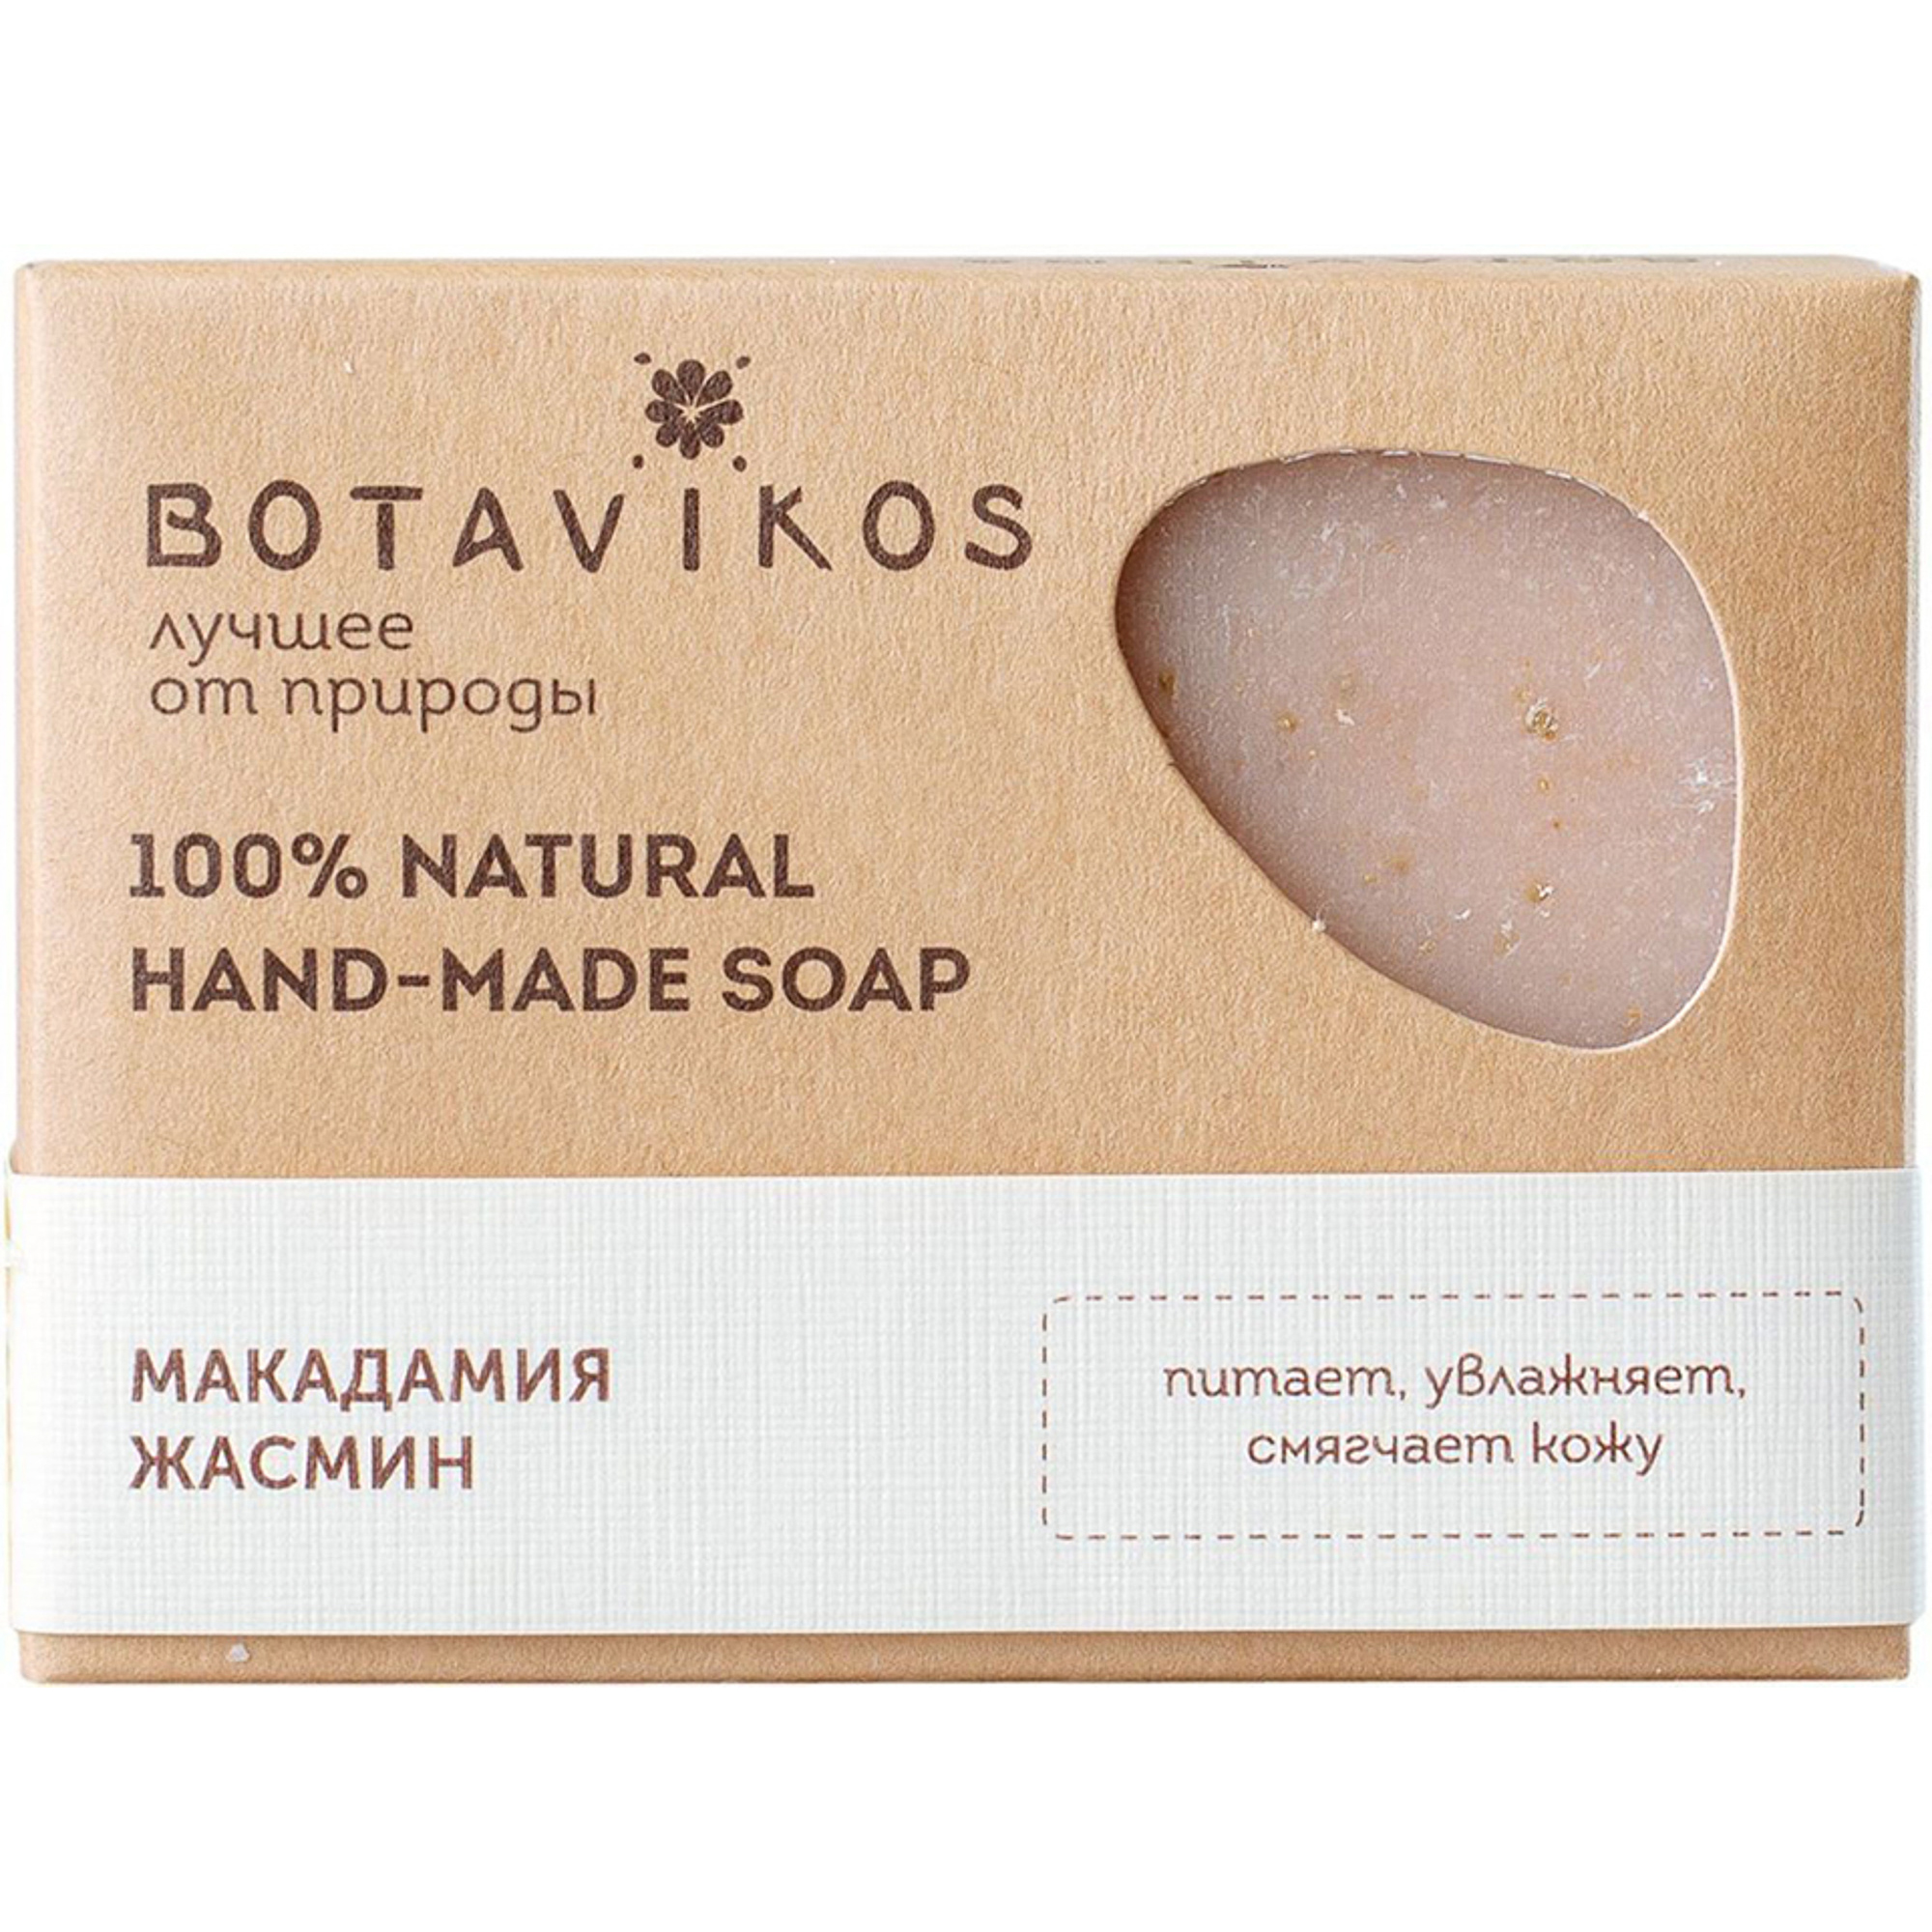 Натуральное мыло ручной работы Botavikos Макадамия Жасмин 100 г мыло скраб botavikos на травах 100 г